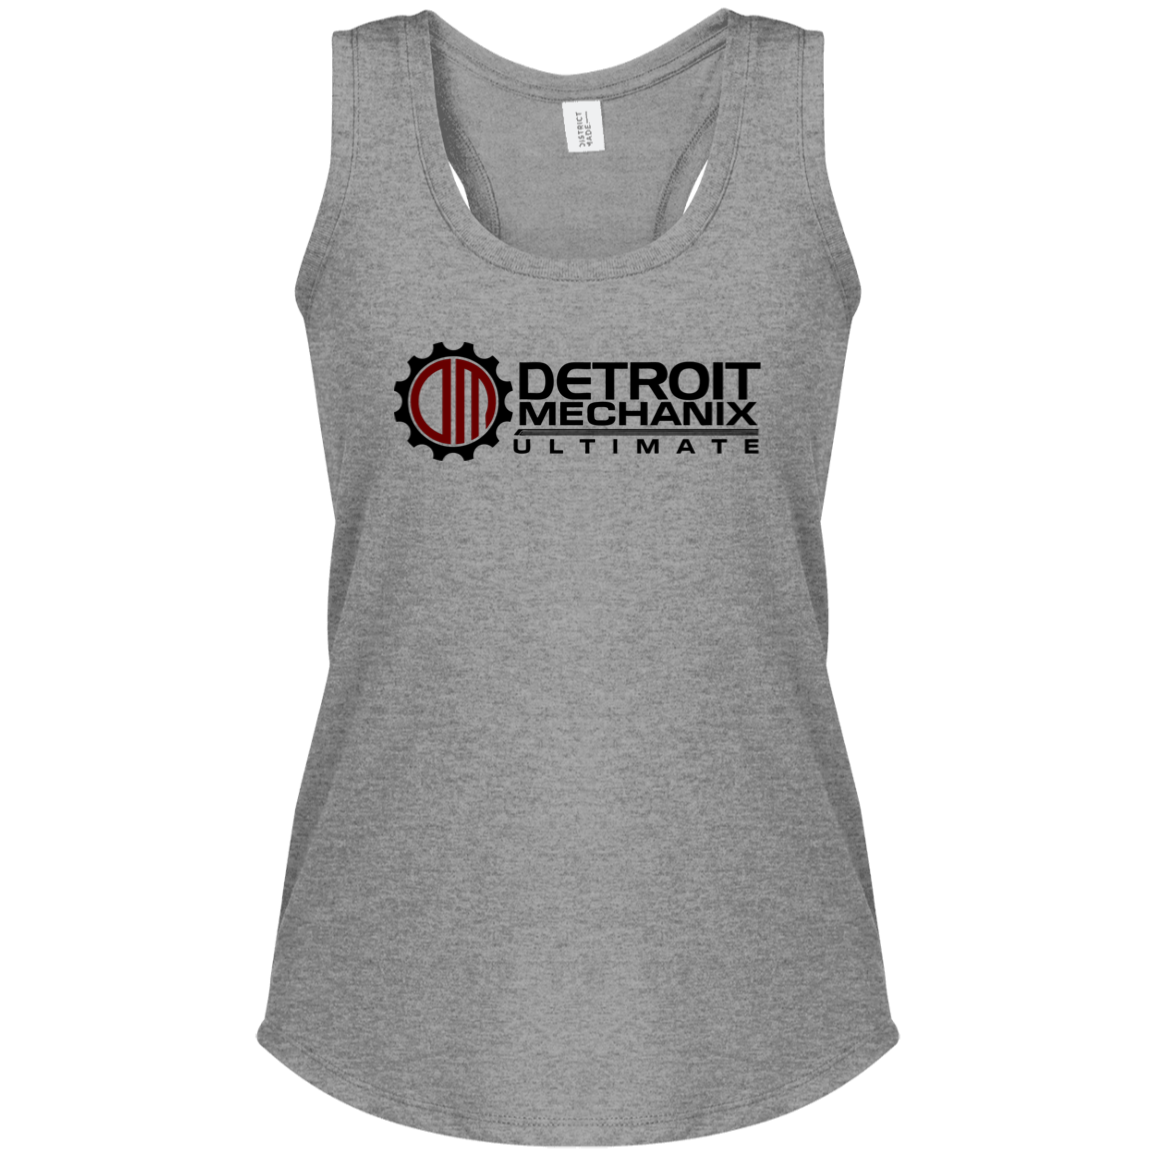 Detroit Mechanix Ultimate Women's Perfect Tri Racerback Tank